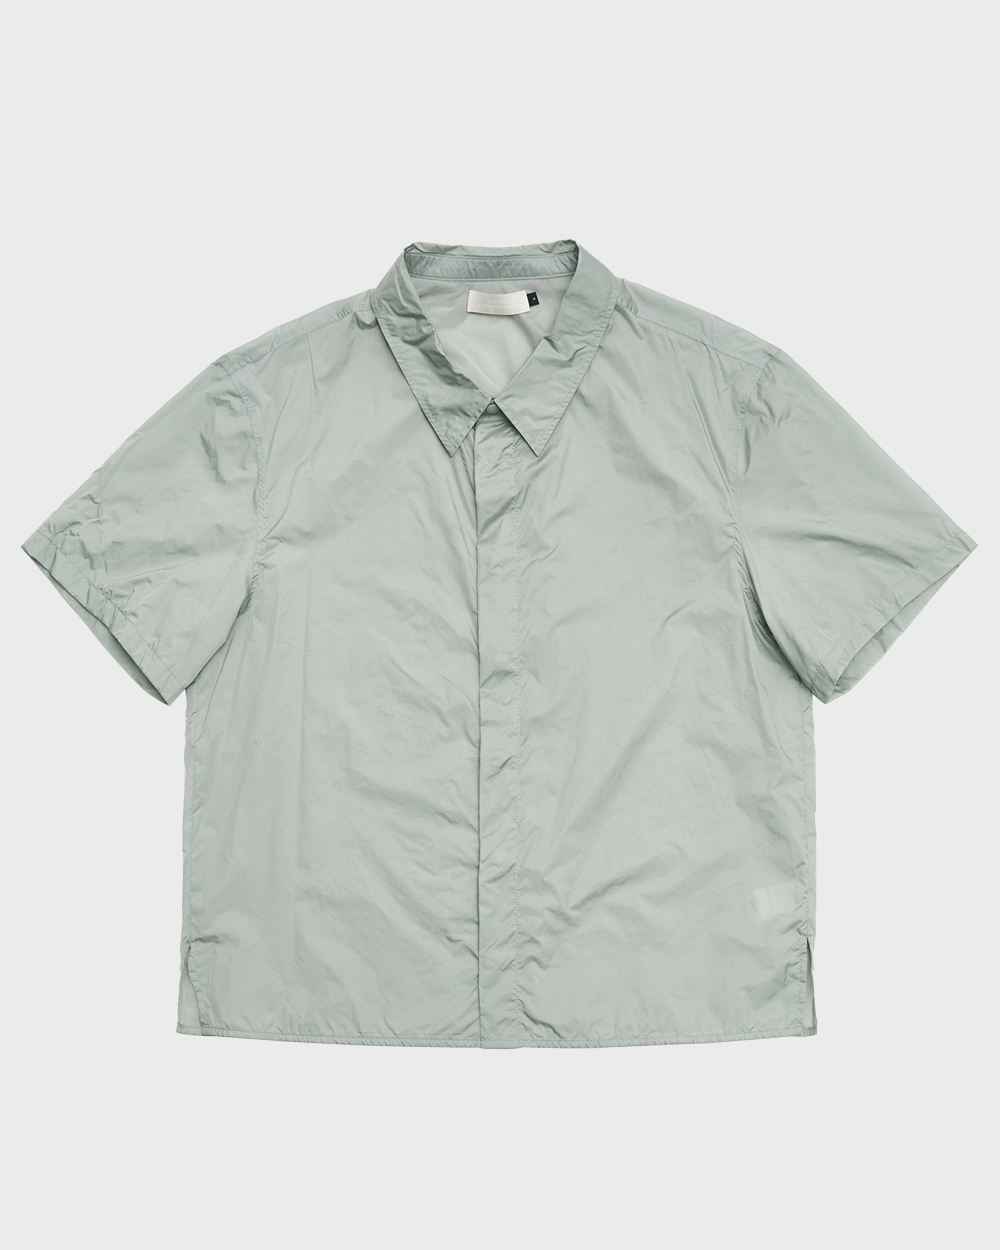 Nylon Short Sleeve Shirts (Mint)